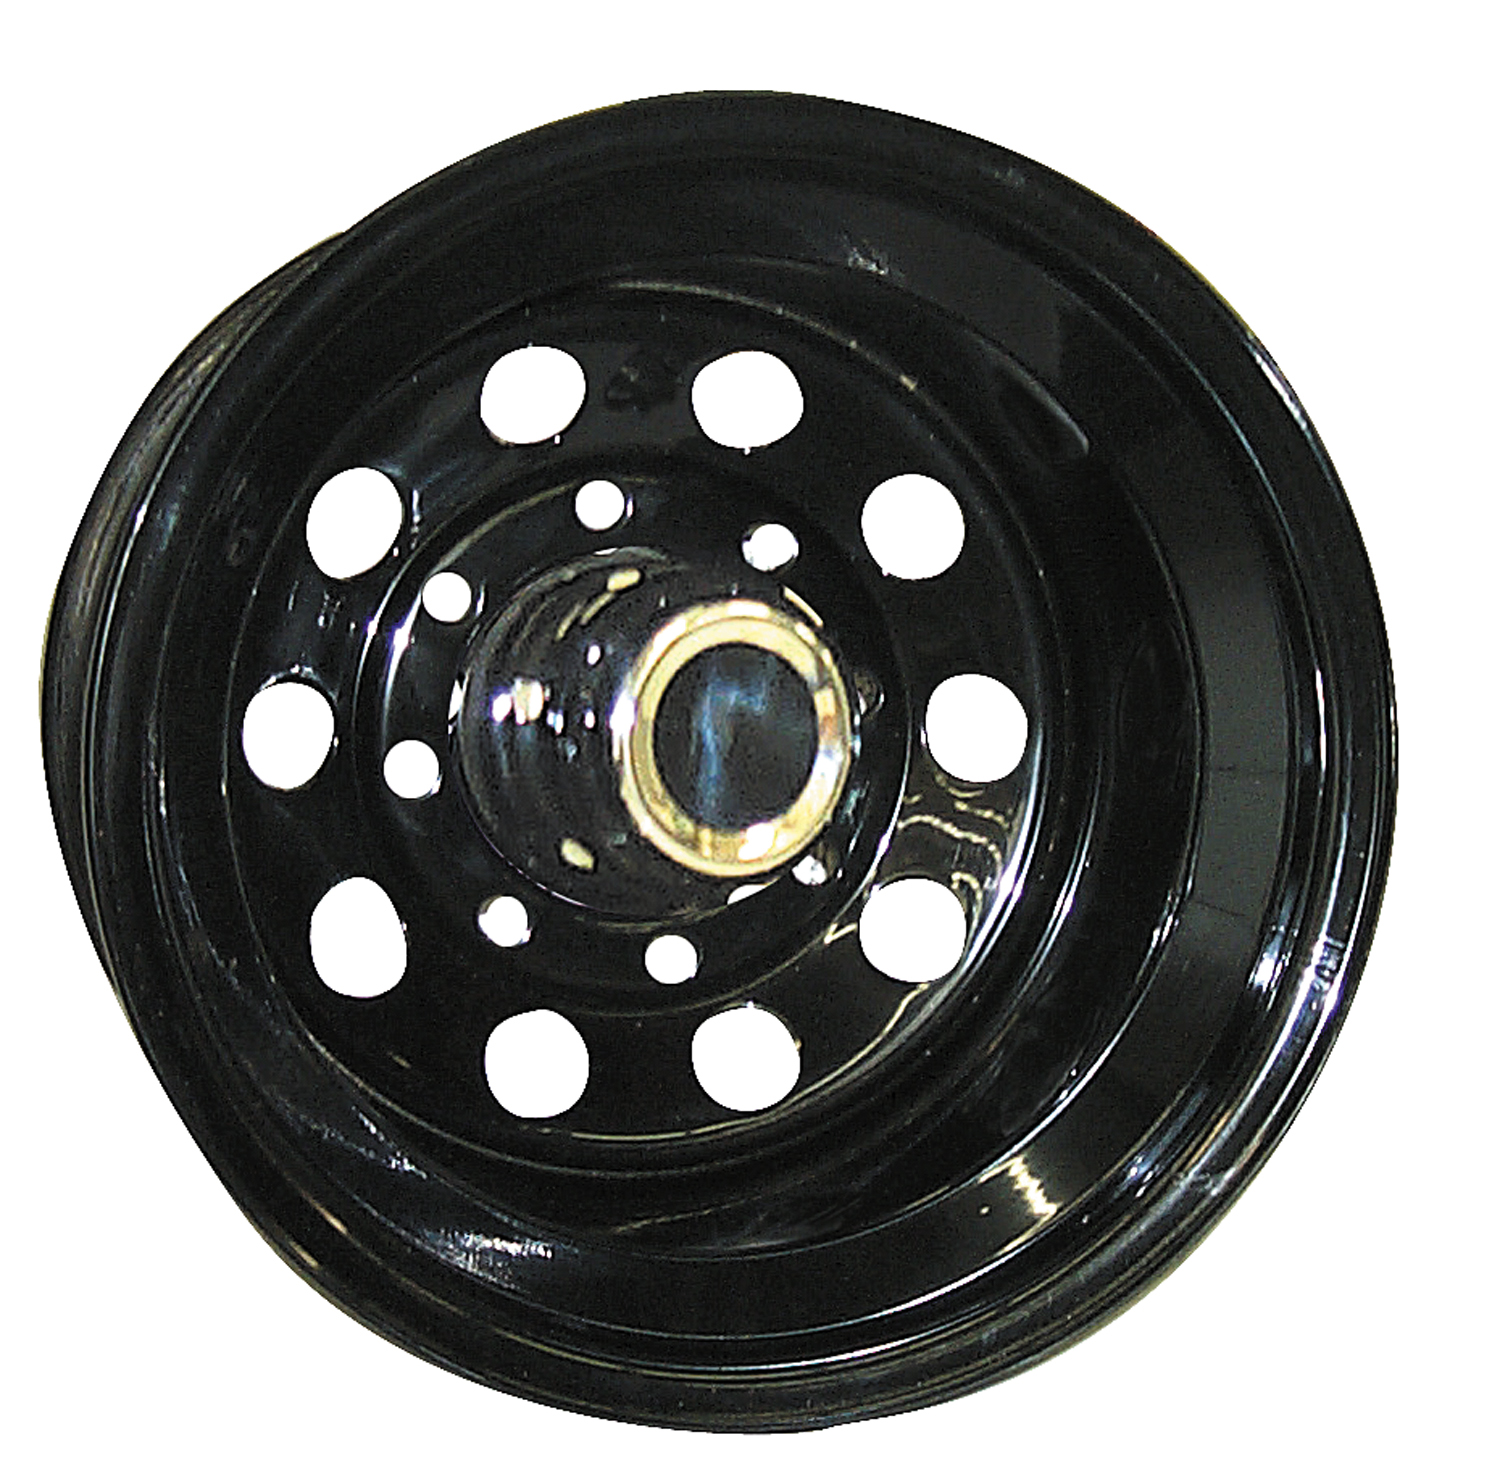 Pro Comp Wheels Pro Comp Wheels 87-6883S4 Rock Crawler Series 87 Black Monster Mod Wheel